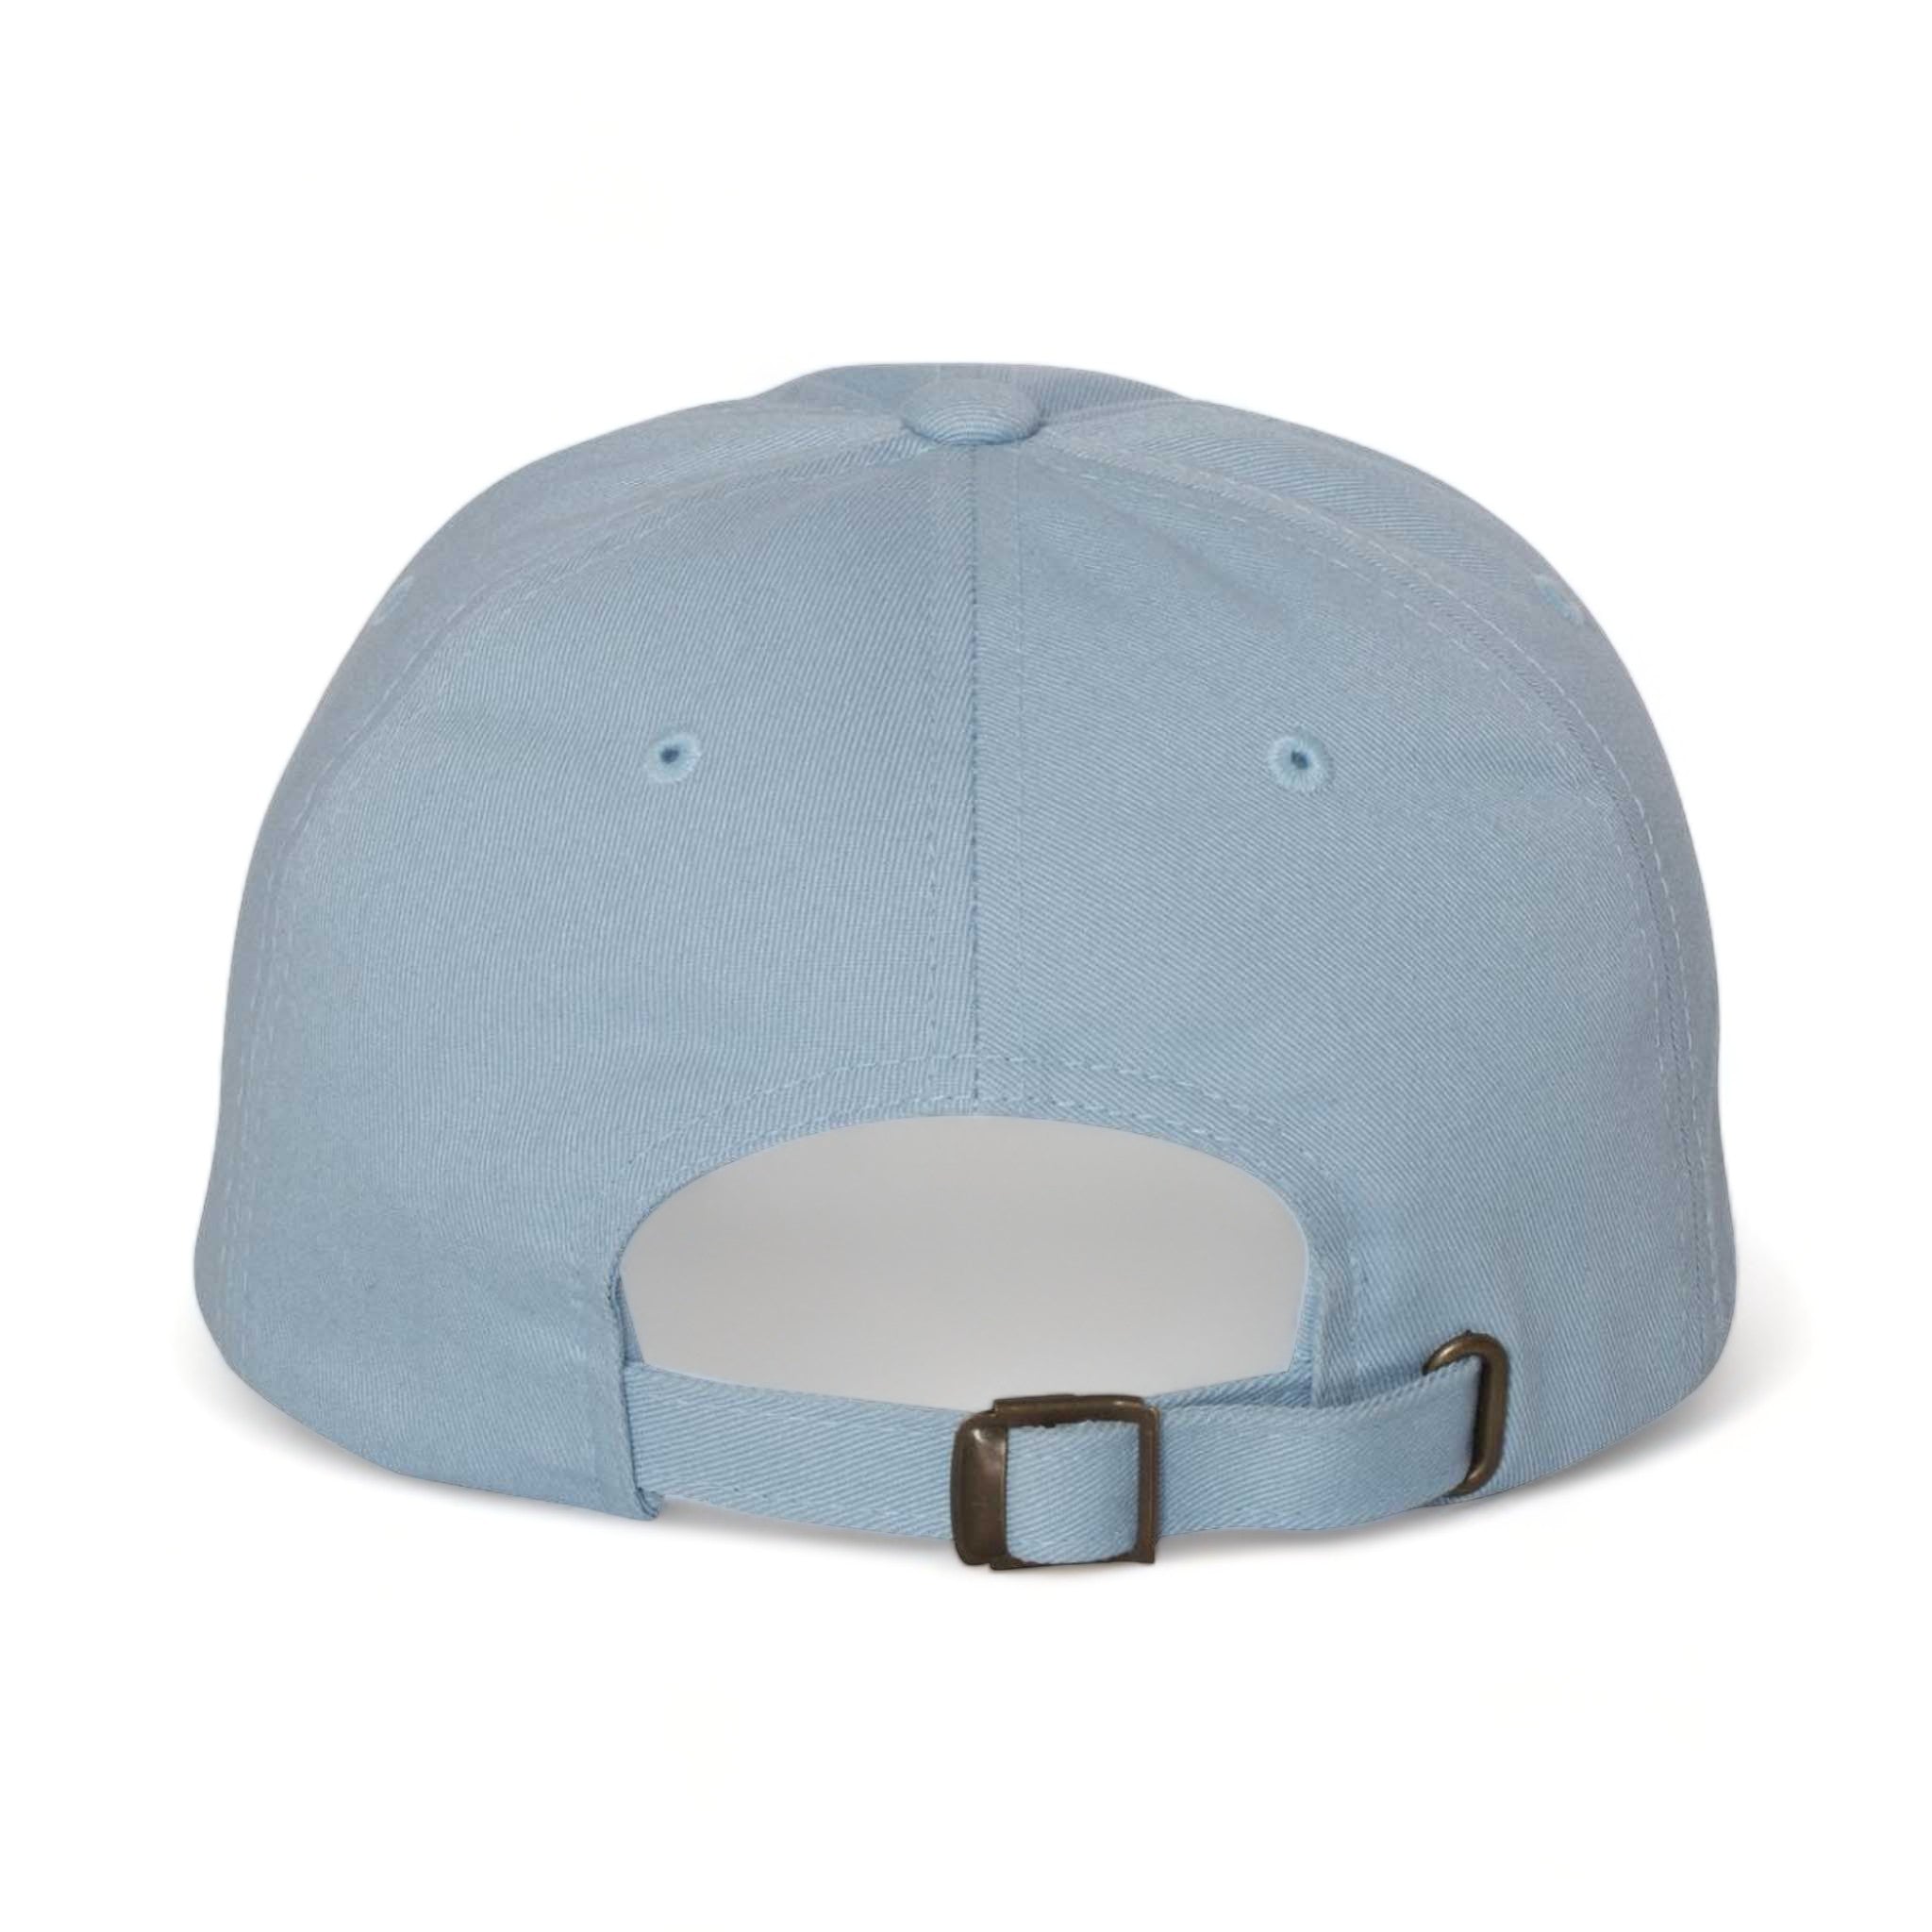 Back view of YP Classics 6245CM custom hat in light blue